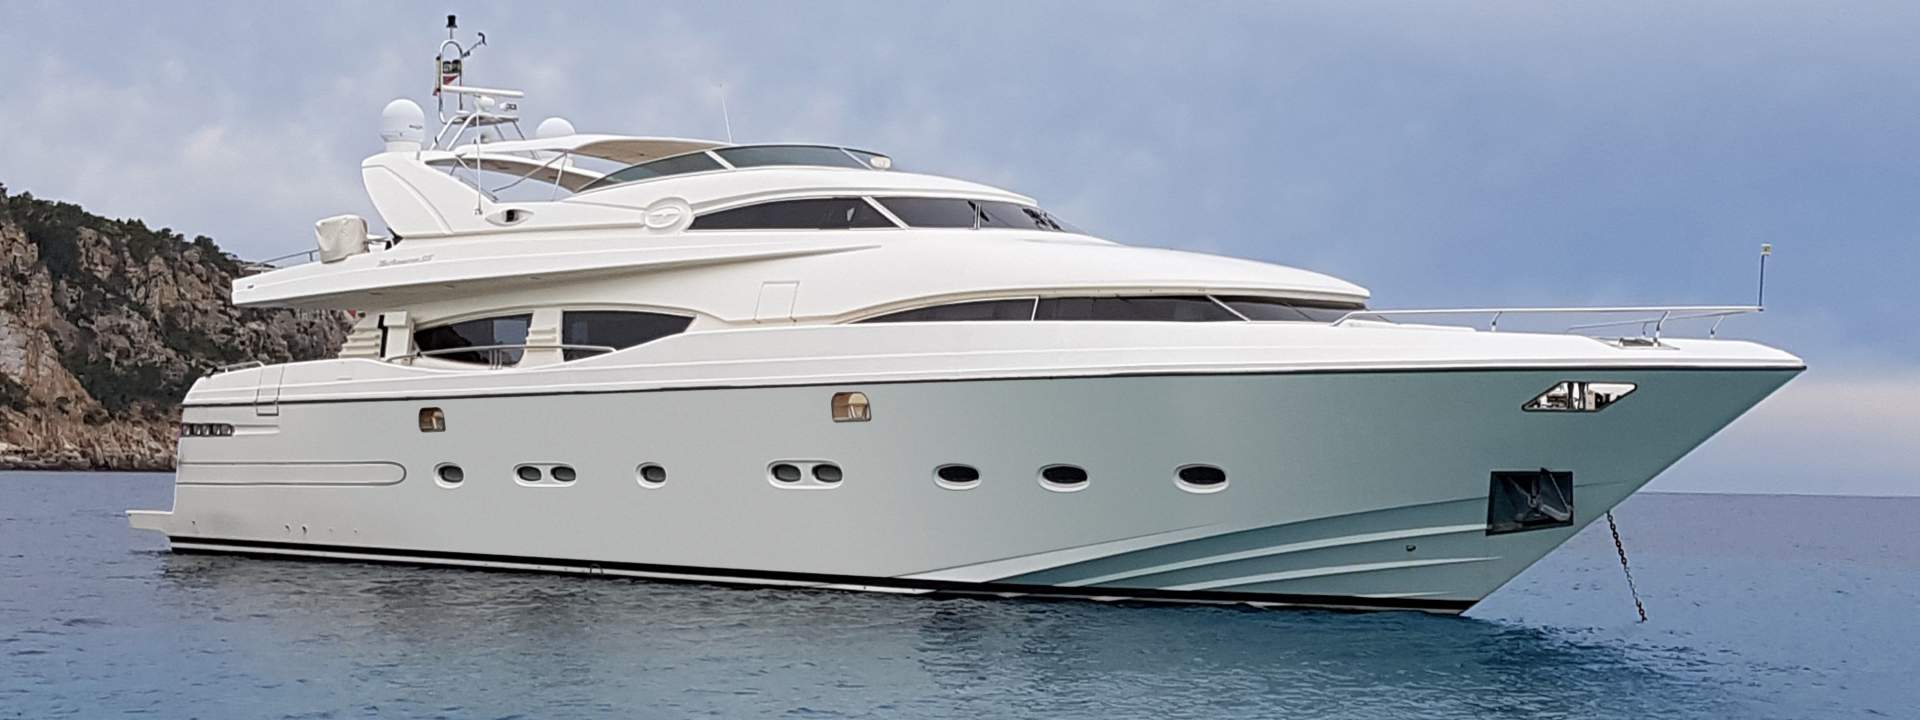 Luxury Yacht Technema 95